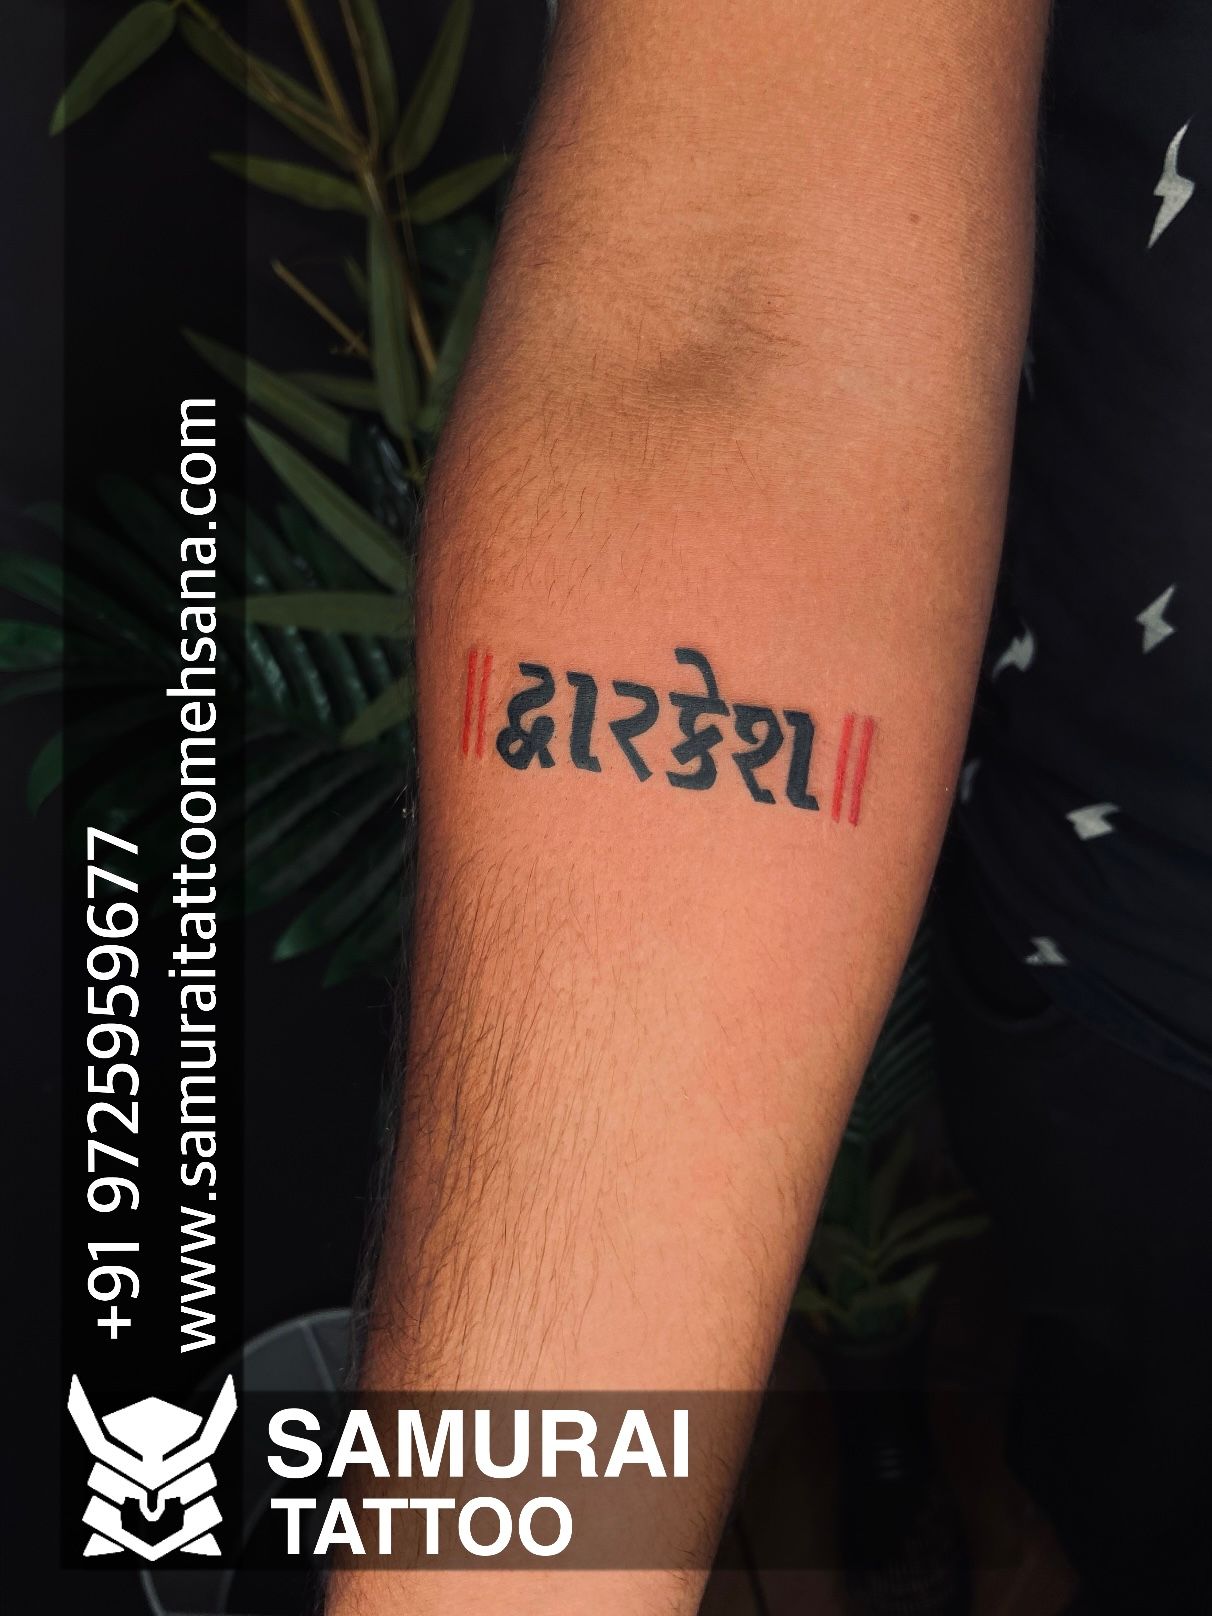 Maa sonal sonbai meldi sikotar chehar sadhi jodh name tattoo gujrati  cellgraphy | Forarm tattoos, Tattoo studio, Line tattoos